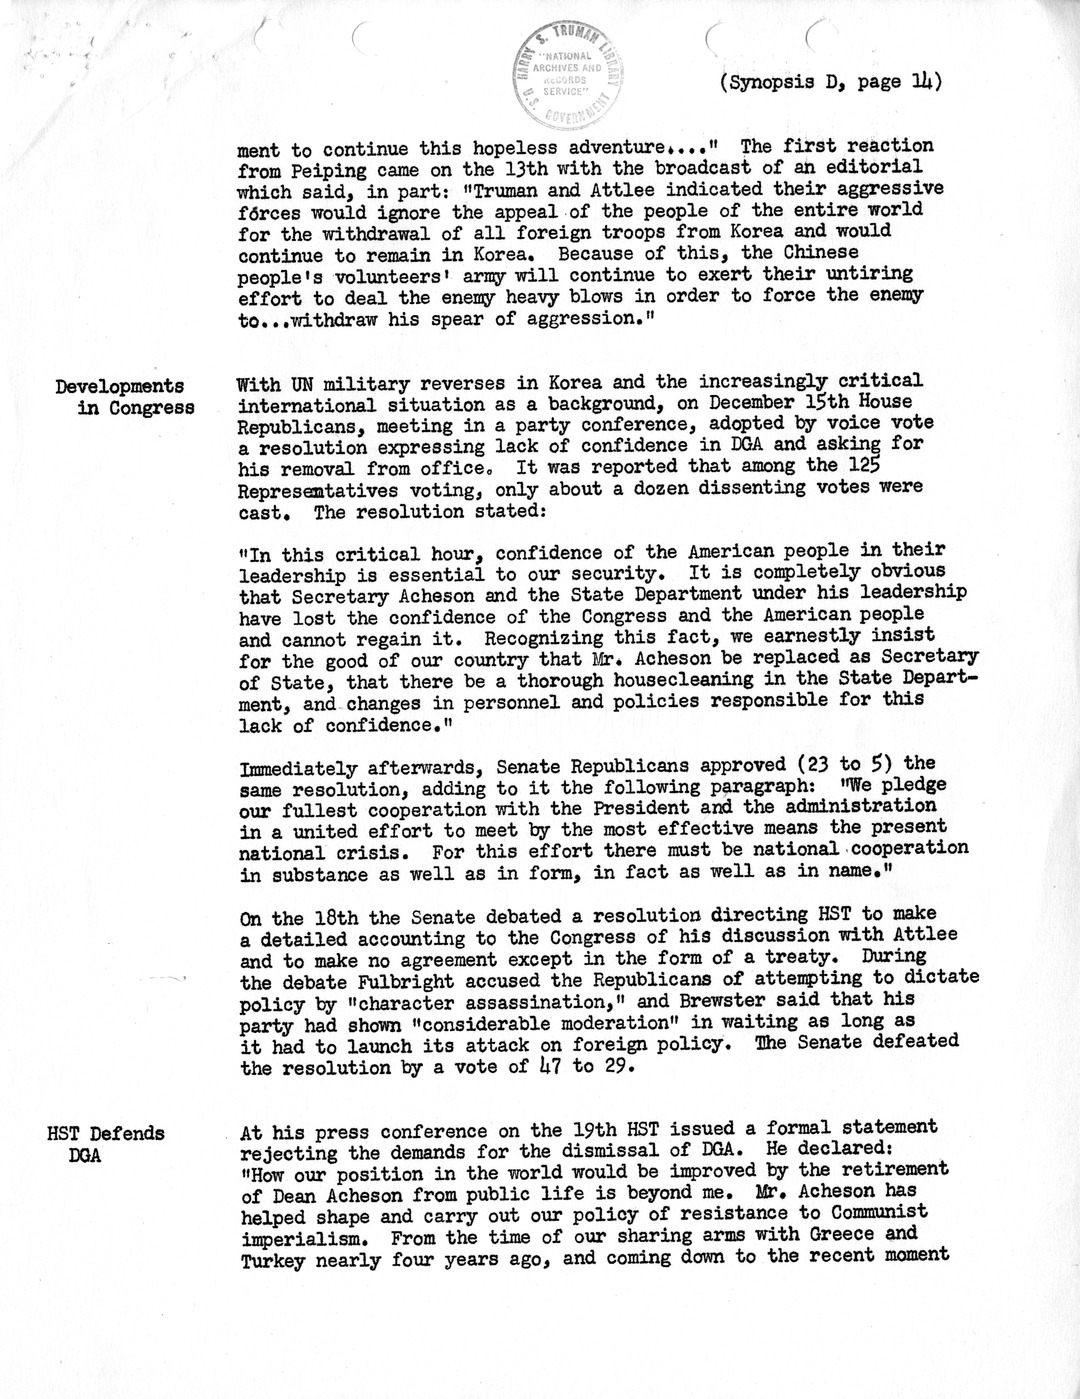 Synopsis D, Korea - Diplomatic-Political Developments, September-December 1950